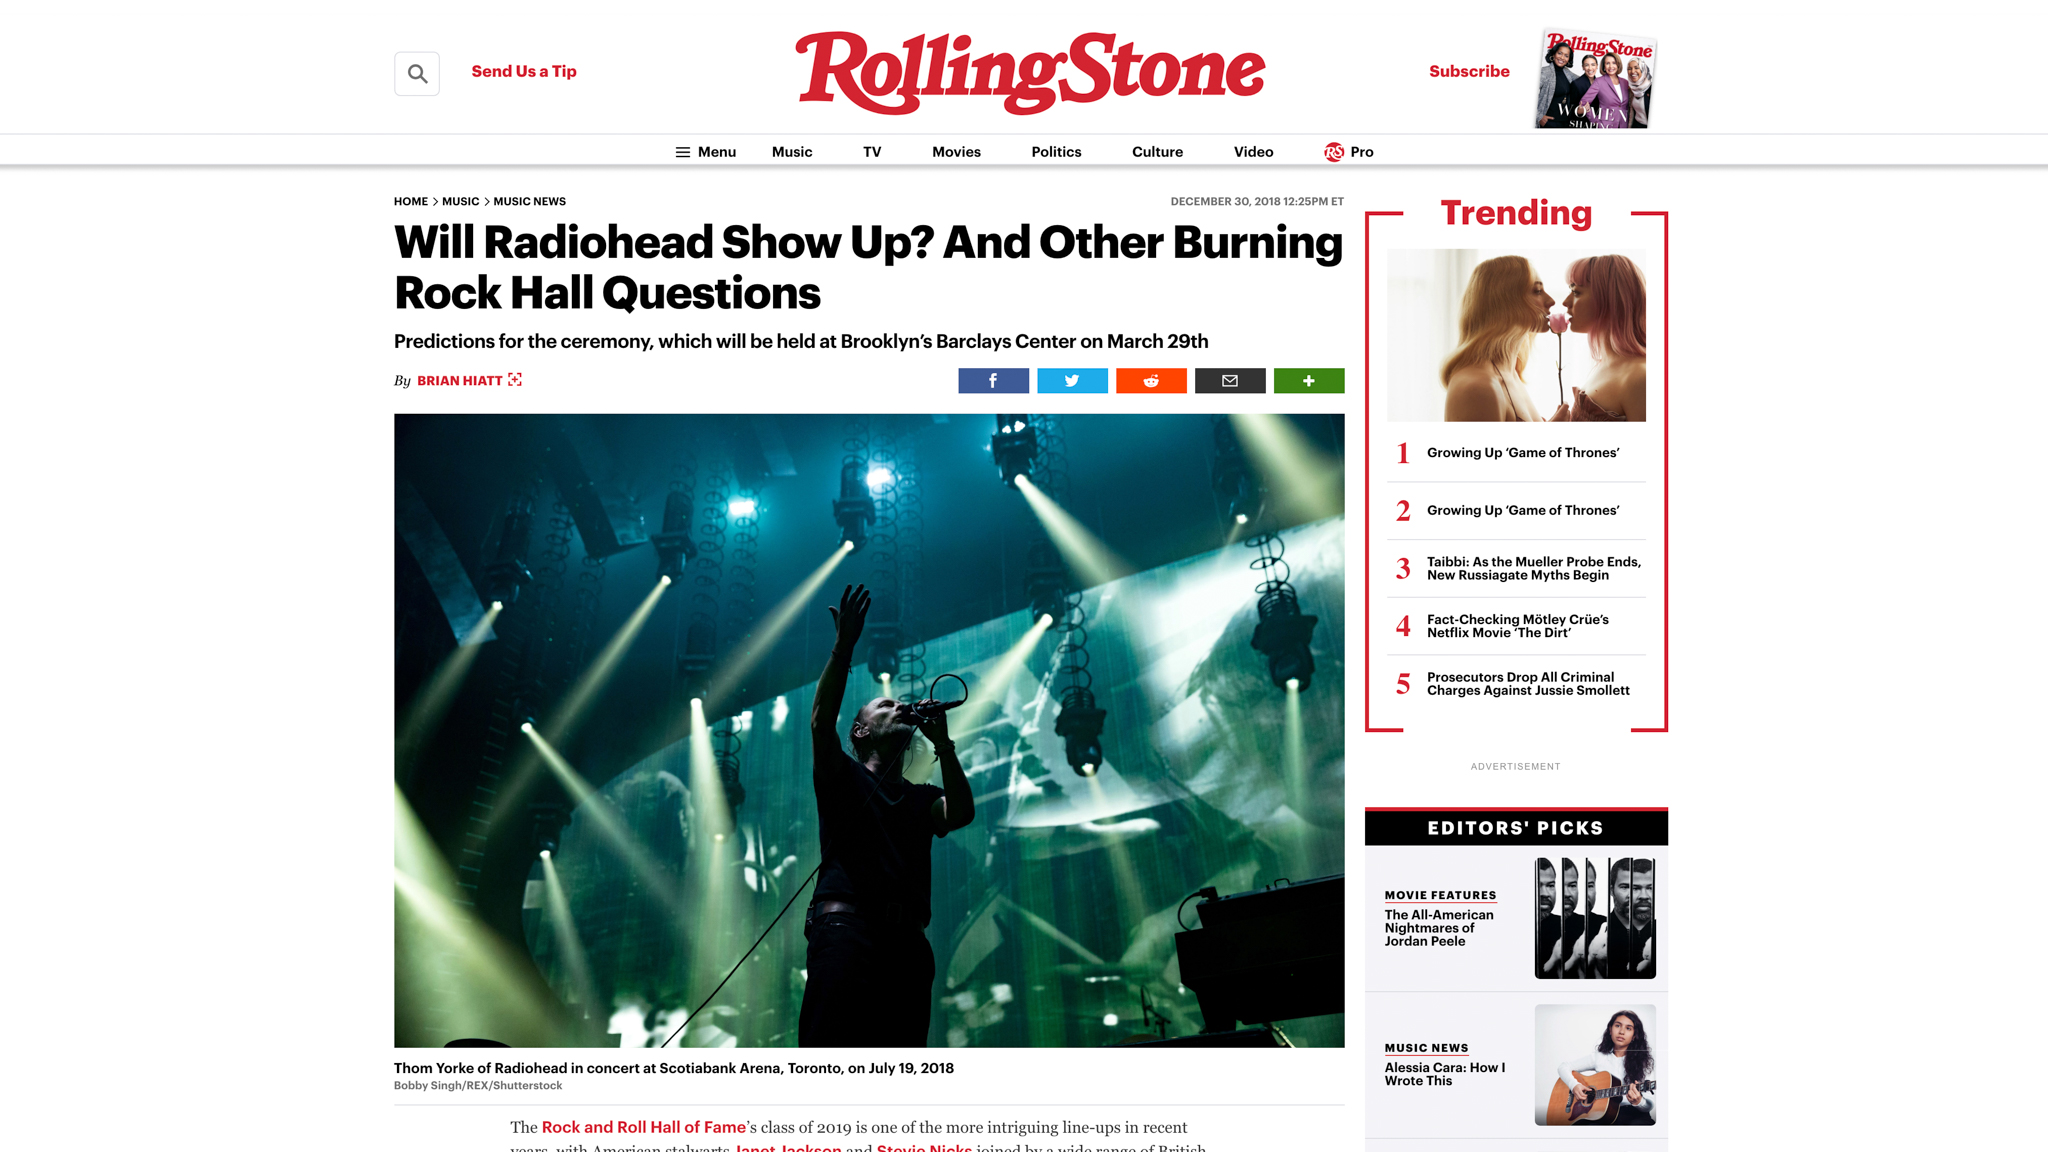 "Radiohead". Rolling Stone. 12.30.2018